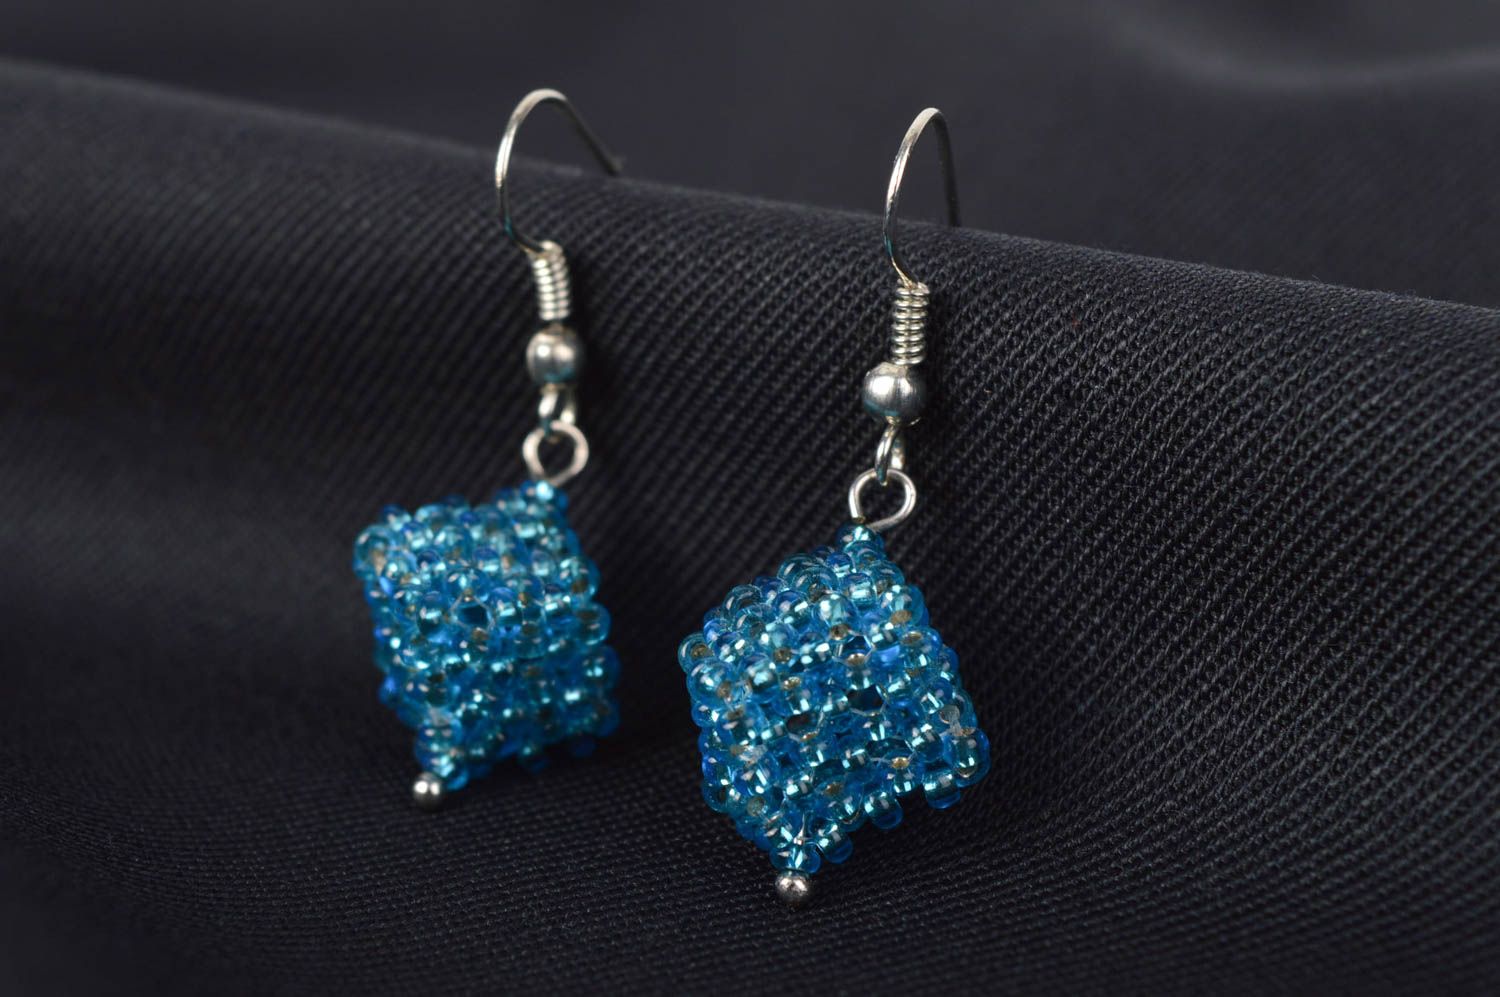 Handmade earrings beautiful blue beaded earrings designer woman accessories photo 1